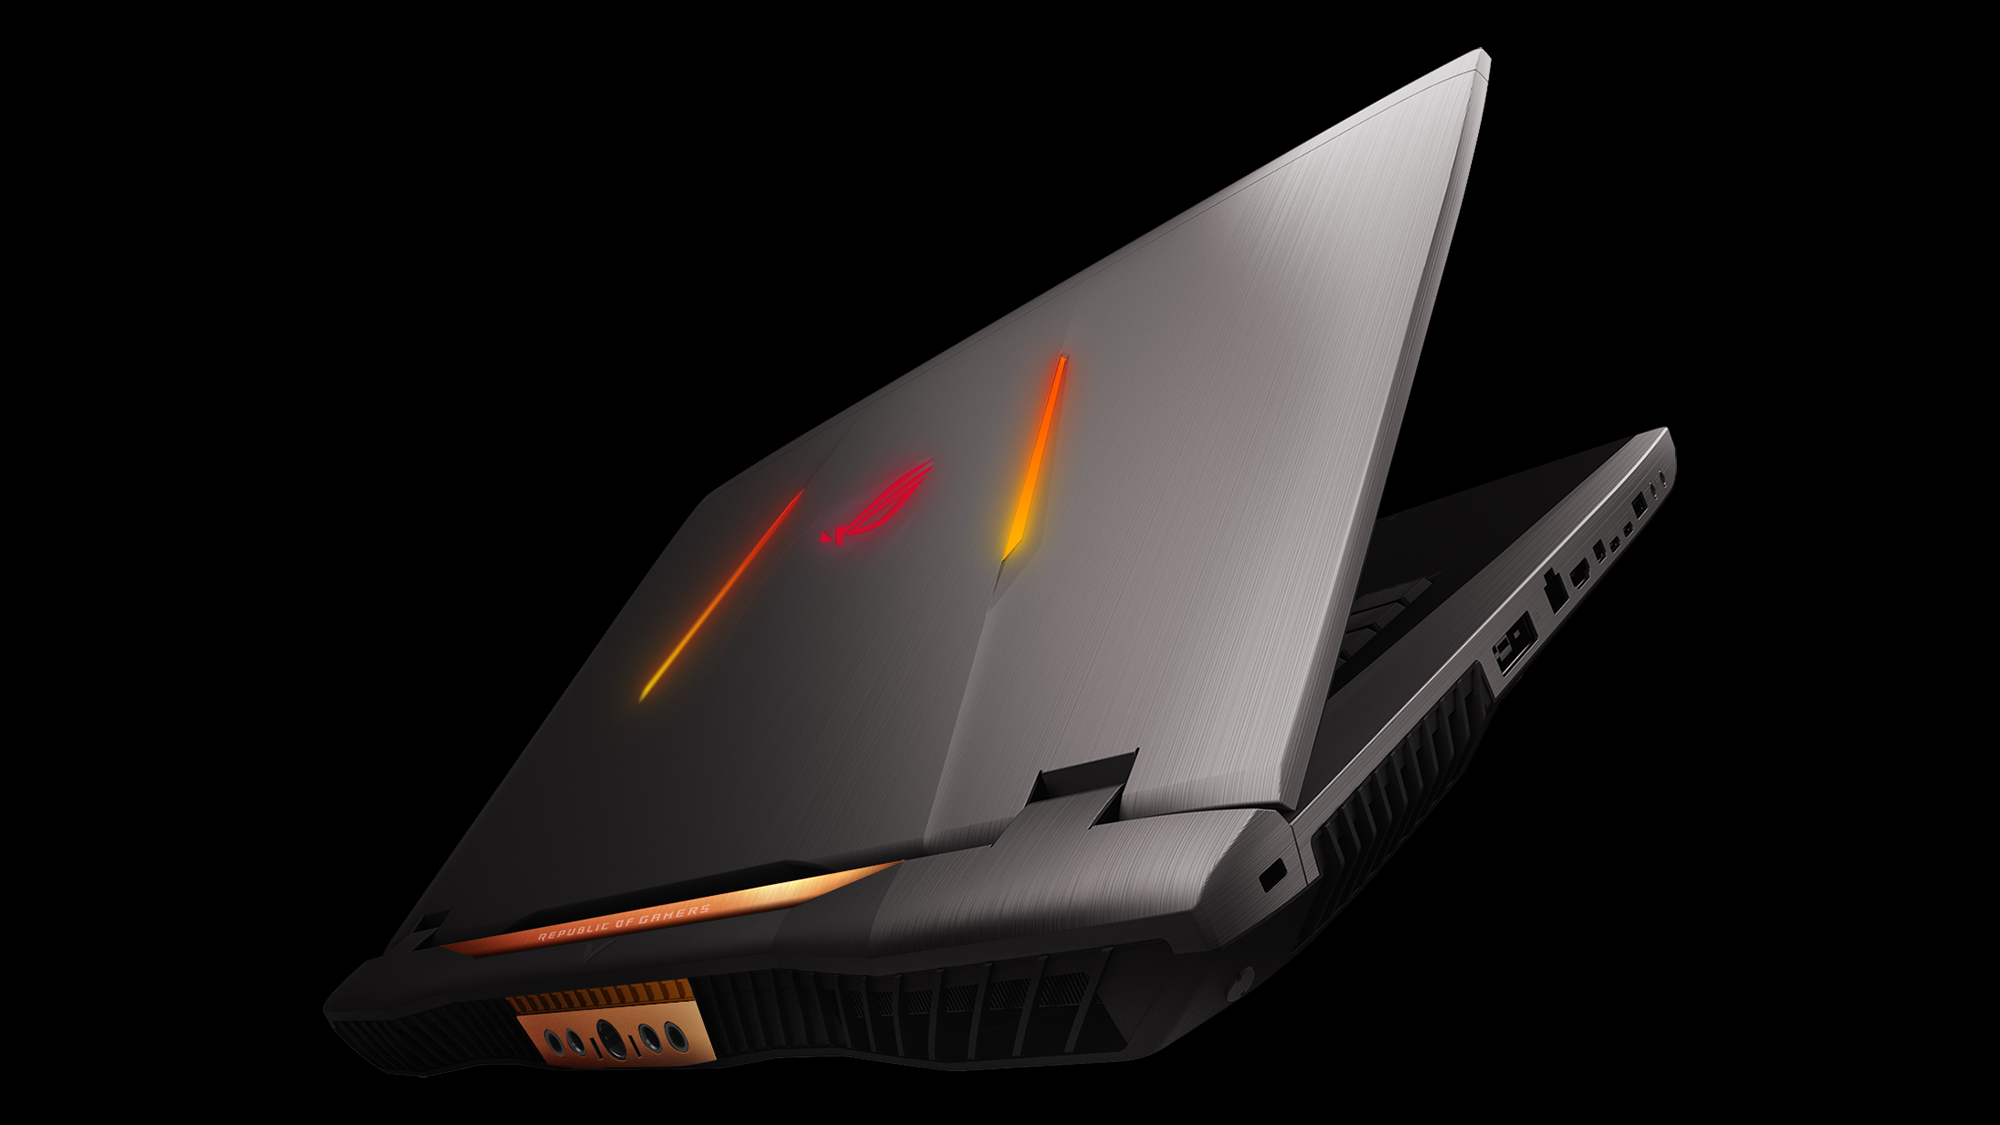 COMPUTEX 2016: Newest Gaming Laptops Showcased